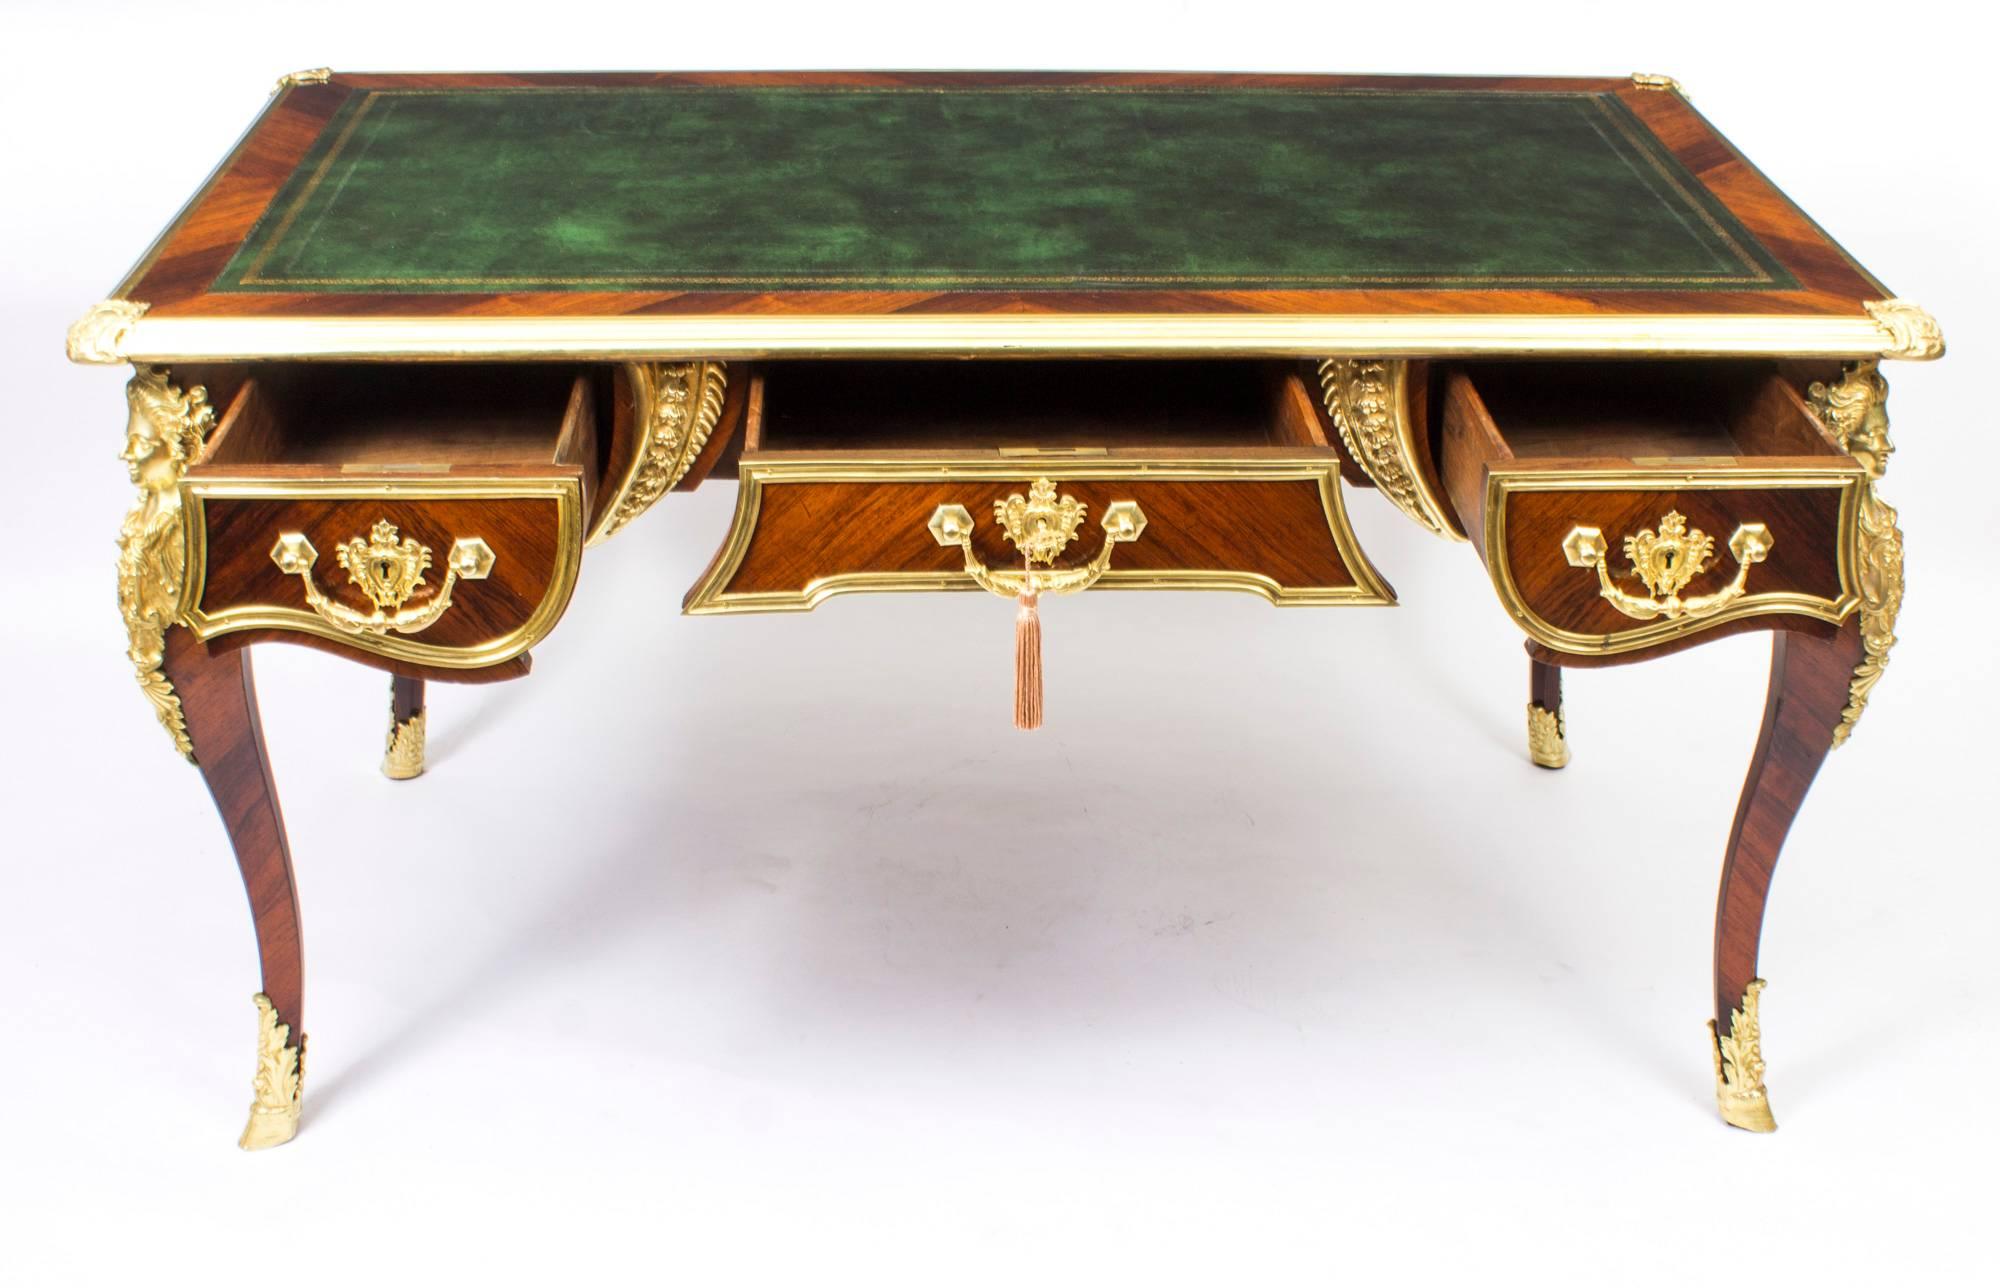 19th Century French Ormolu-Mounted Louis Revival Bureau Plat Desk 1